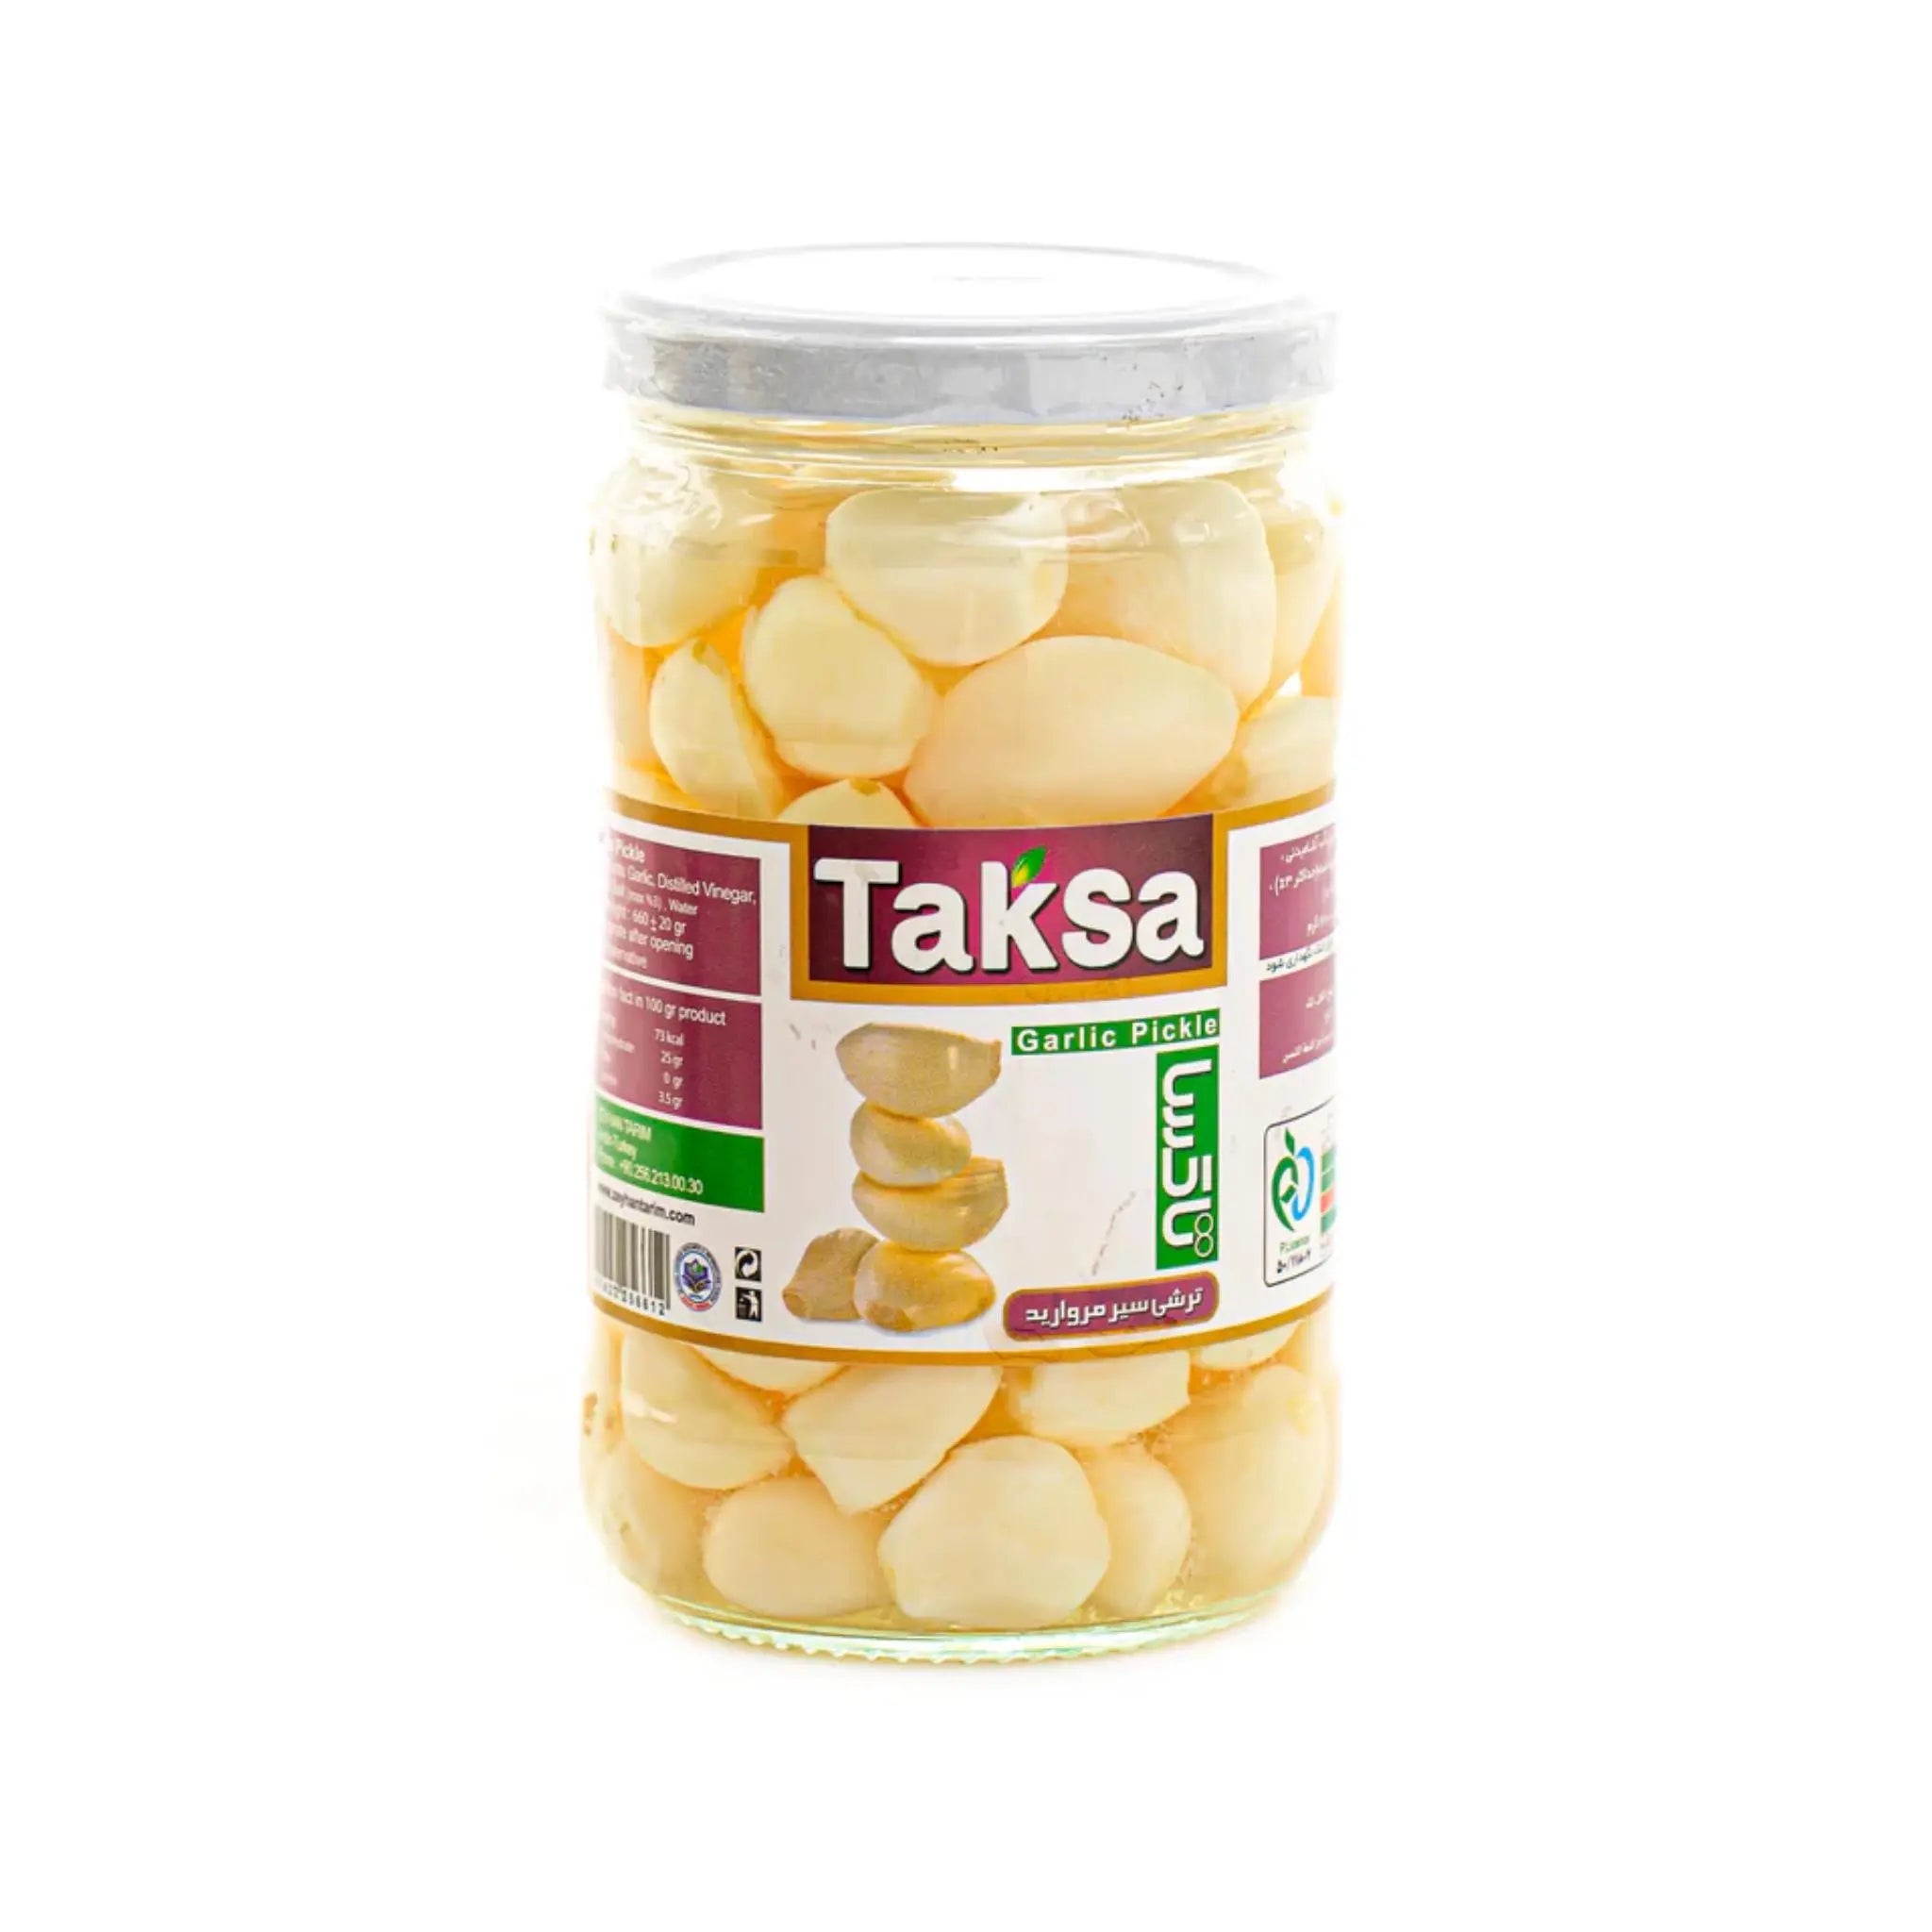 Taksa Garlic Pickle (White) - 660gx12 (1 carton) Marino.AE